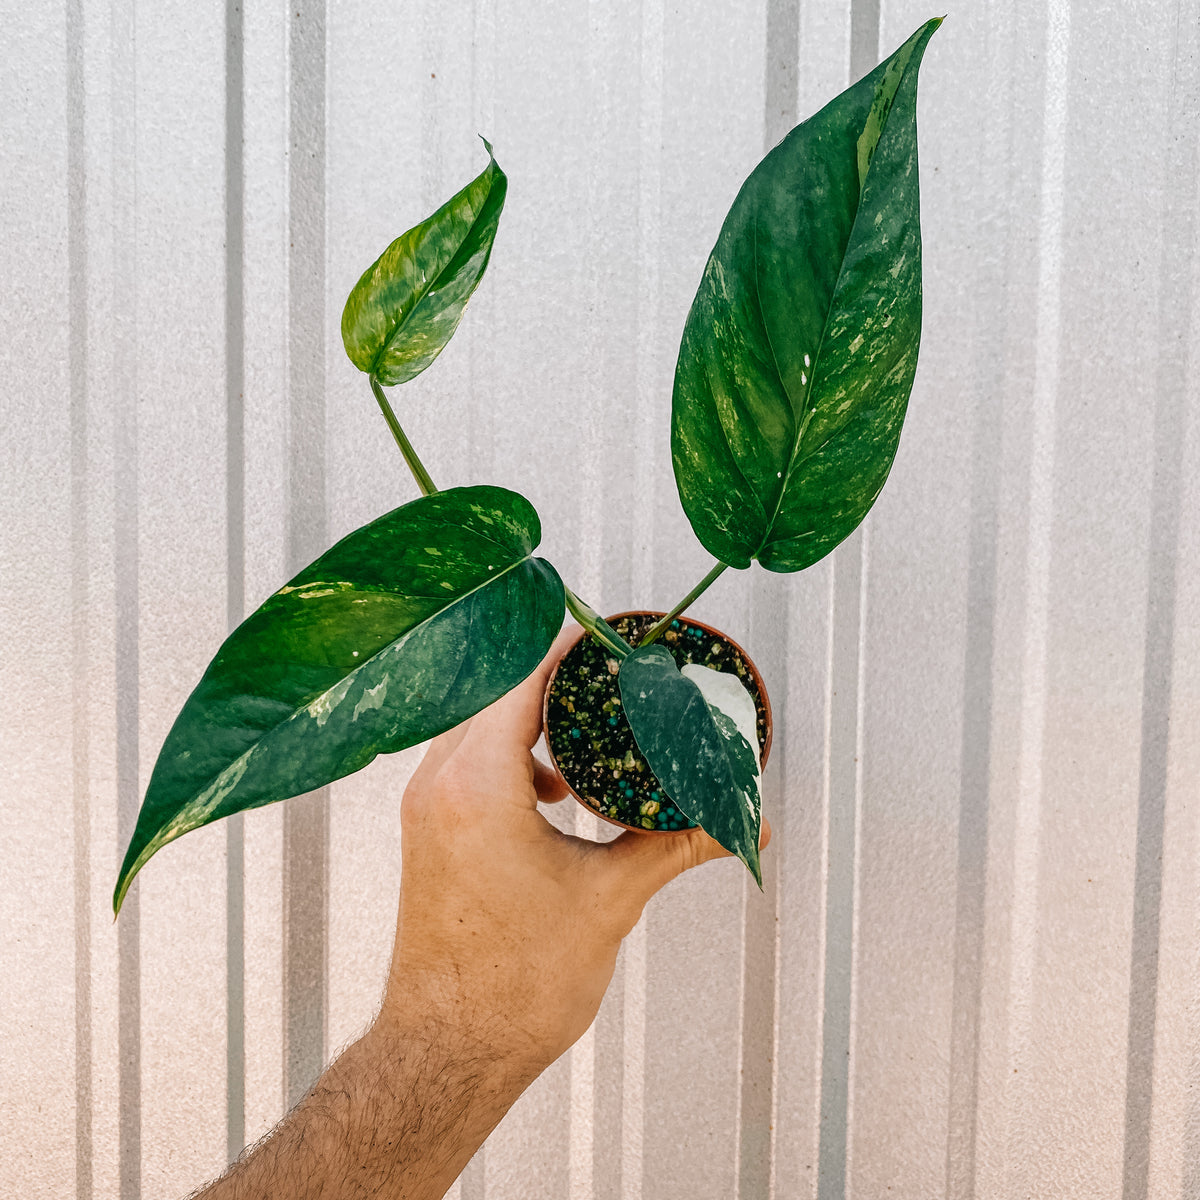 Epipremnum Pinnatum Albo/ How to keep the Variegation in Plants